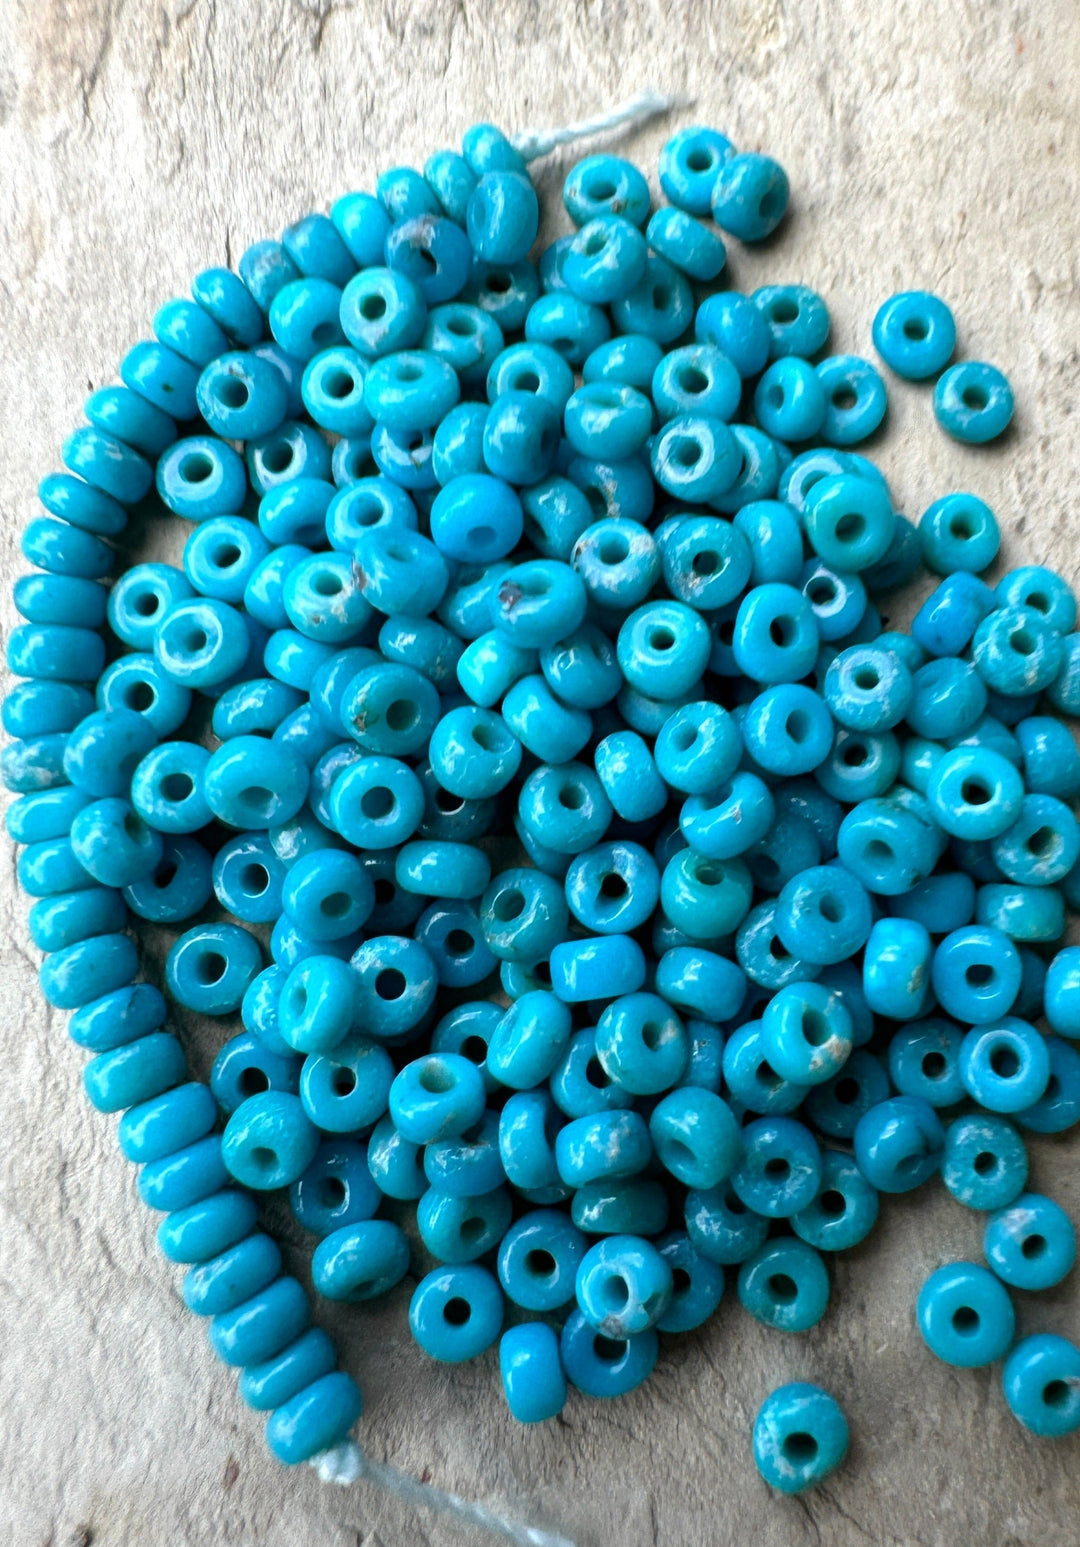 Sleeping Beauty Turquoise (AZ) 2x3mm Rondelle Beads Package